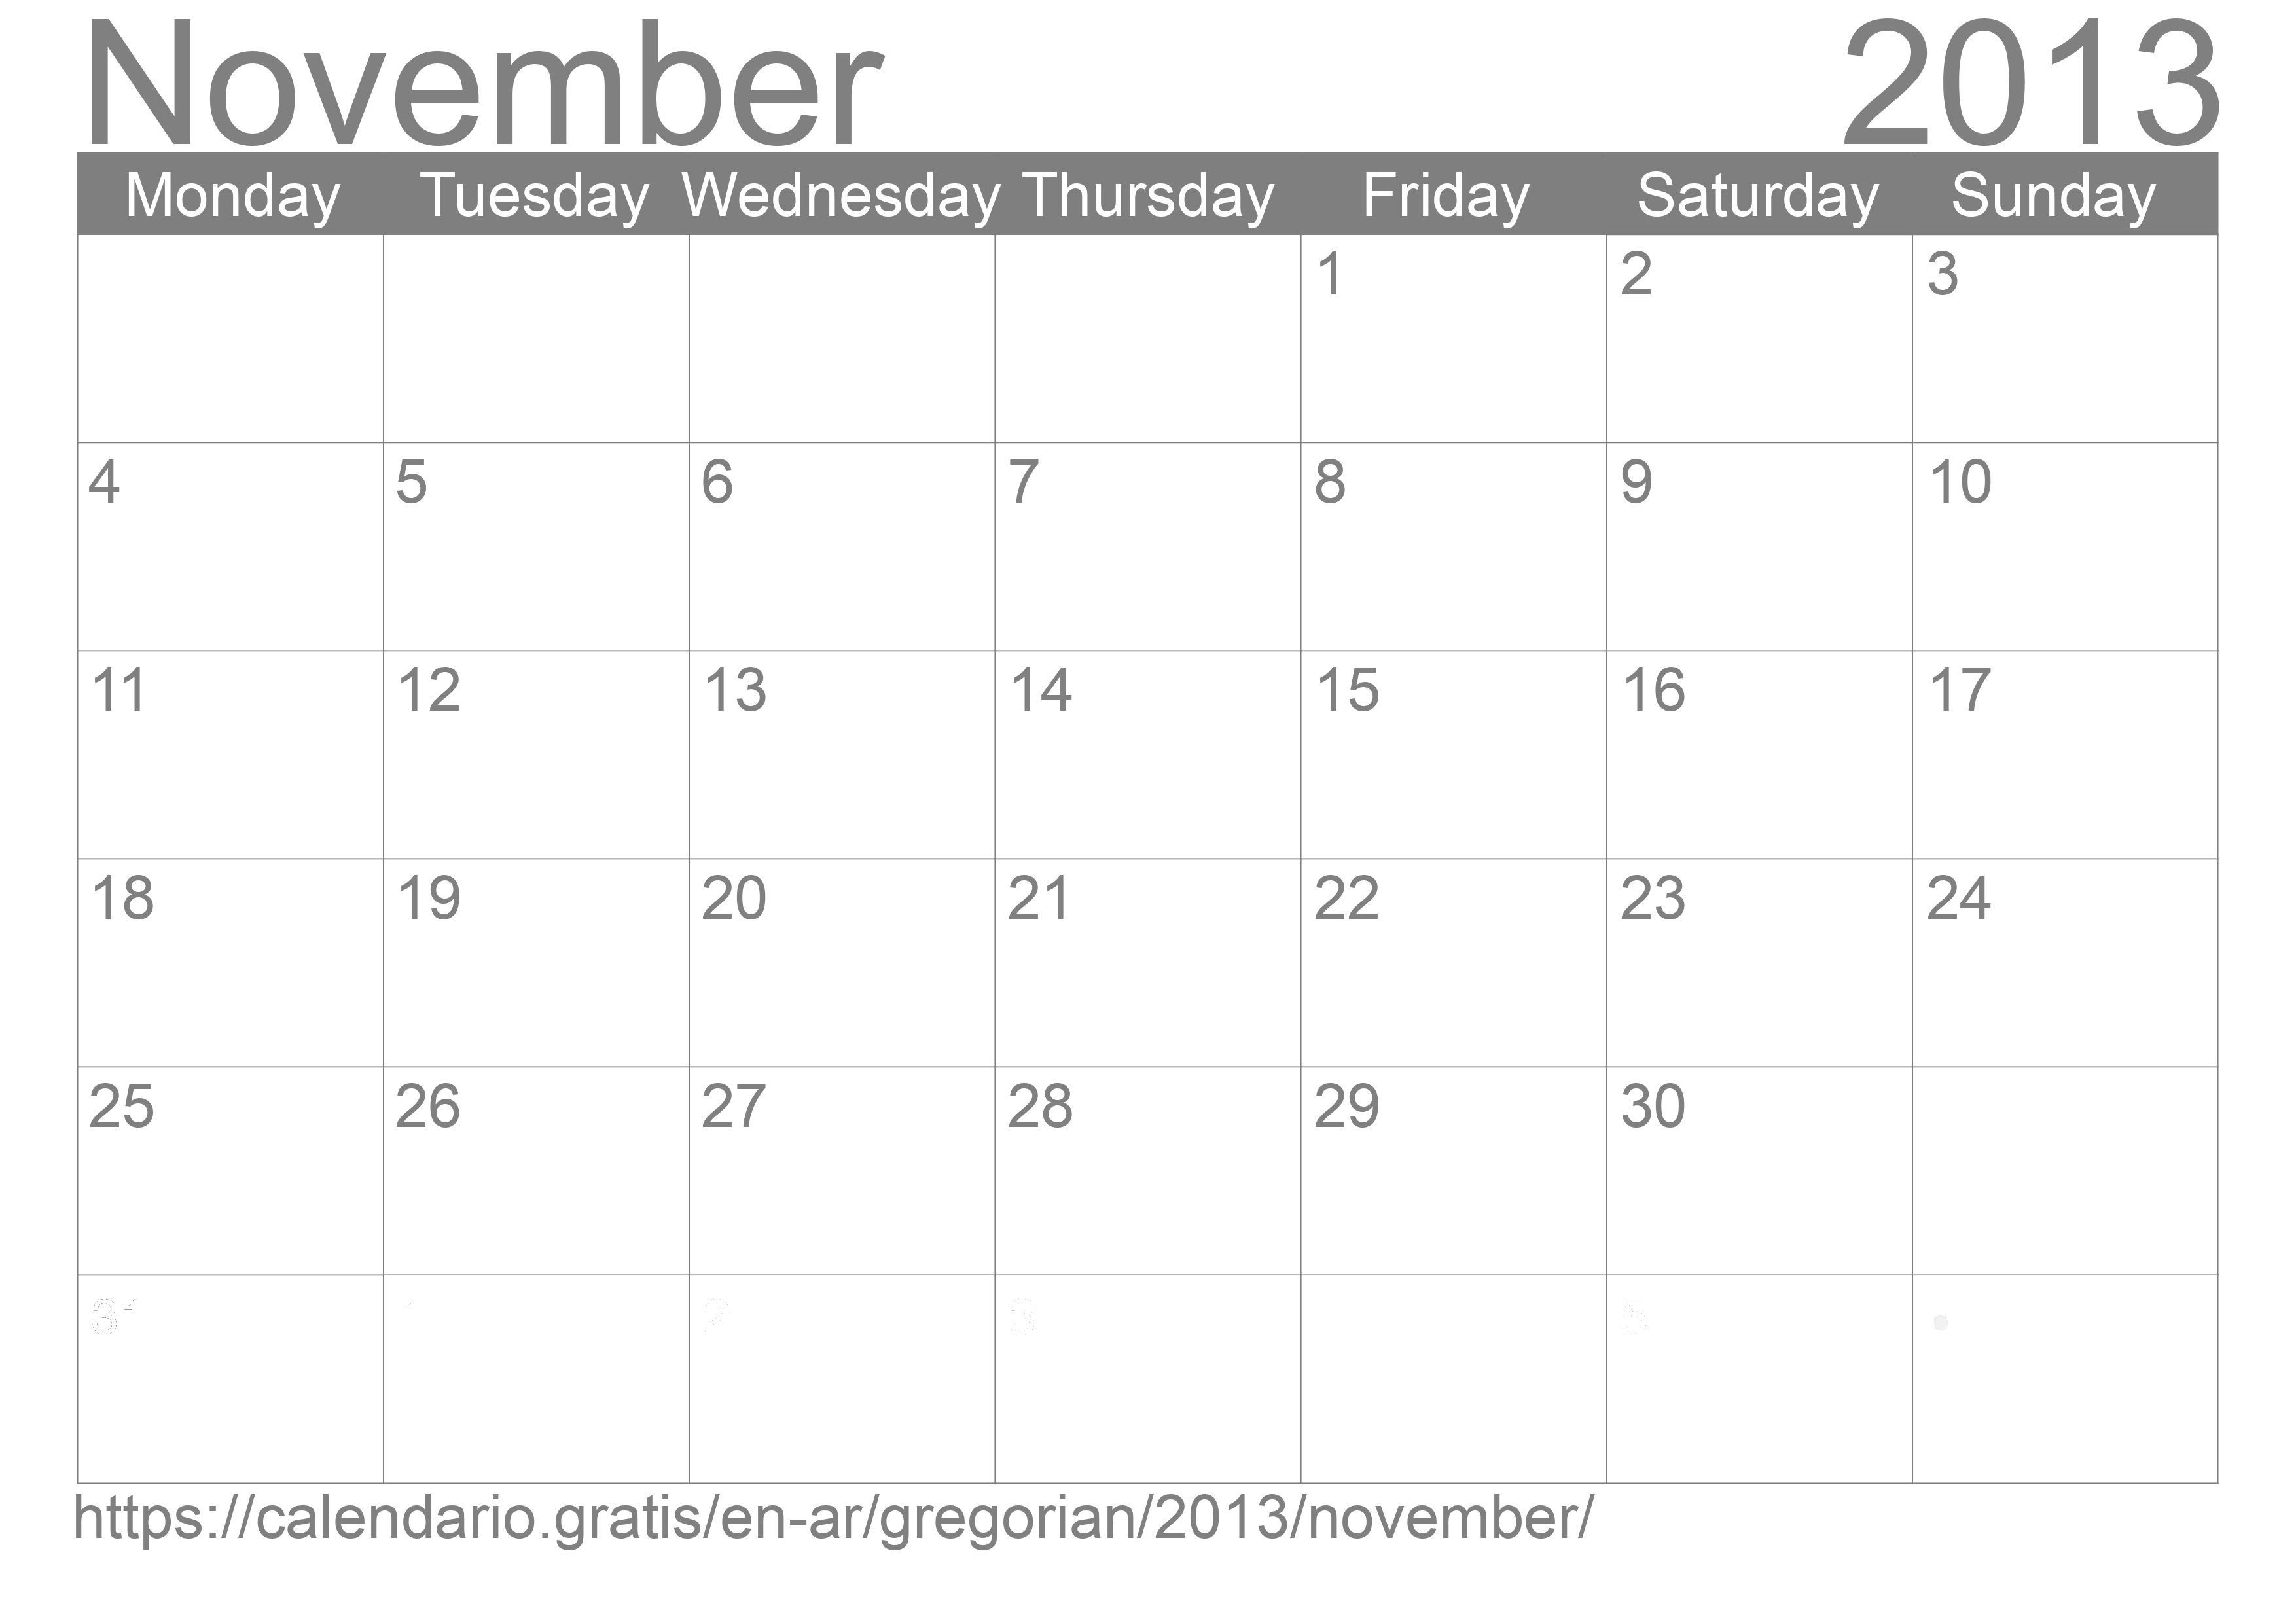 Calendar November 2013 to print